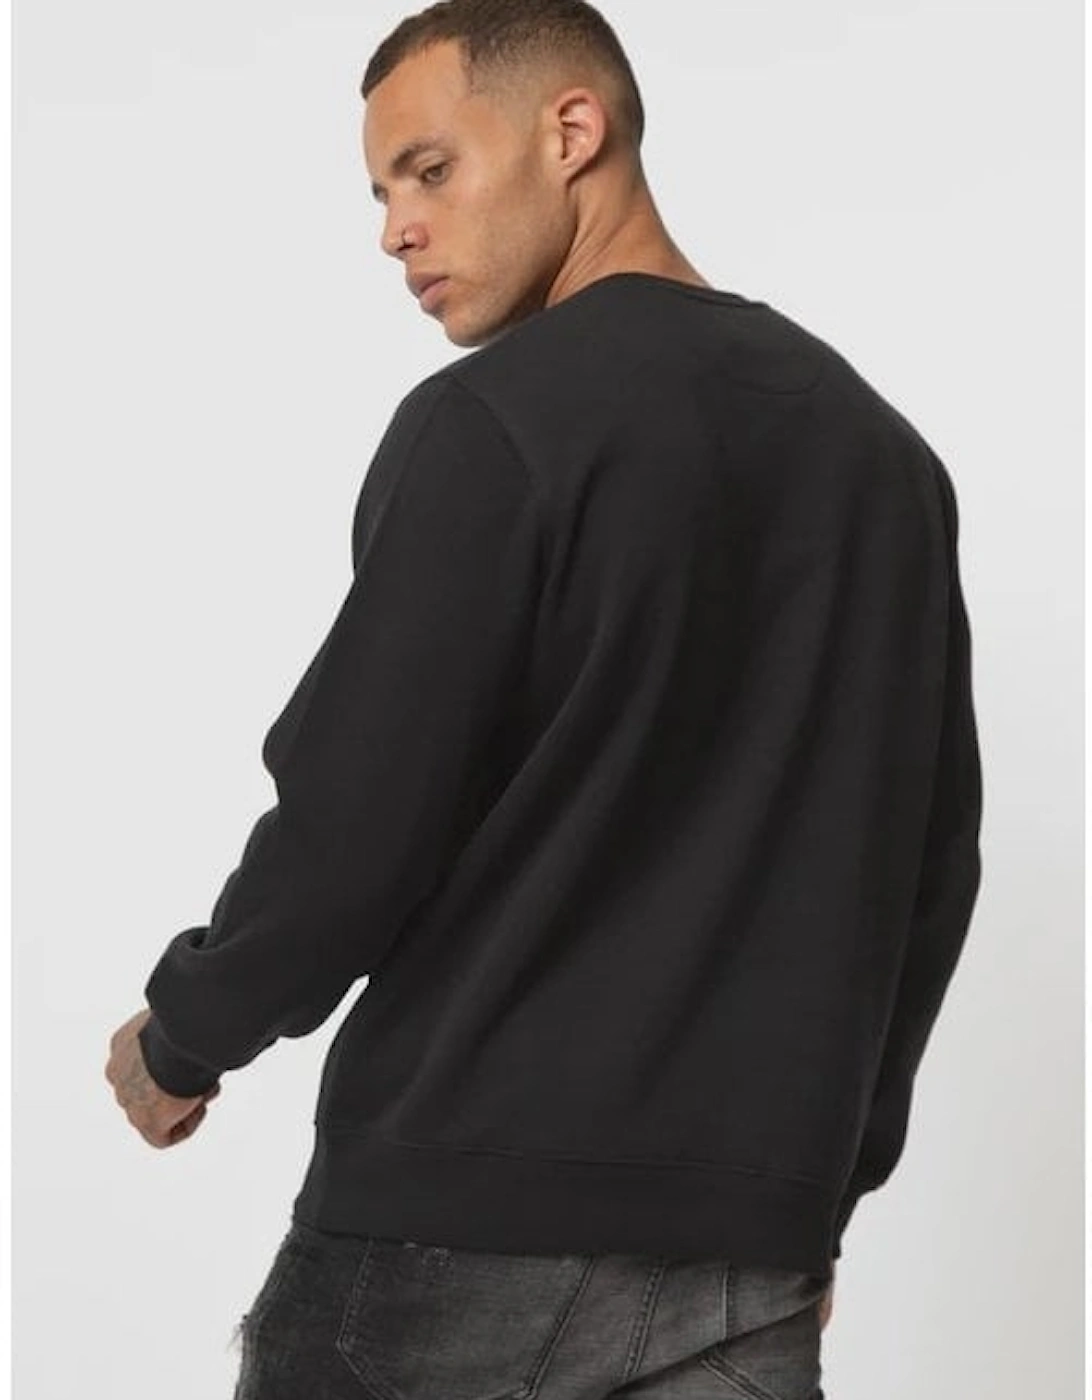 Nastro Sweatshirt - Black